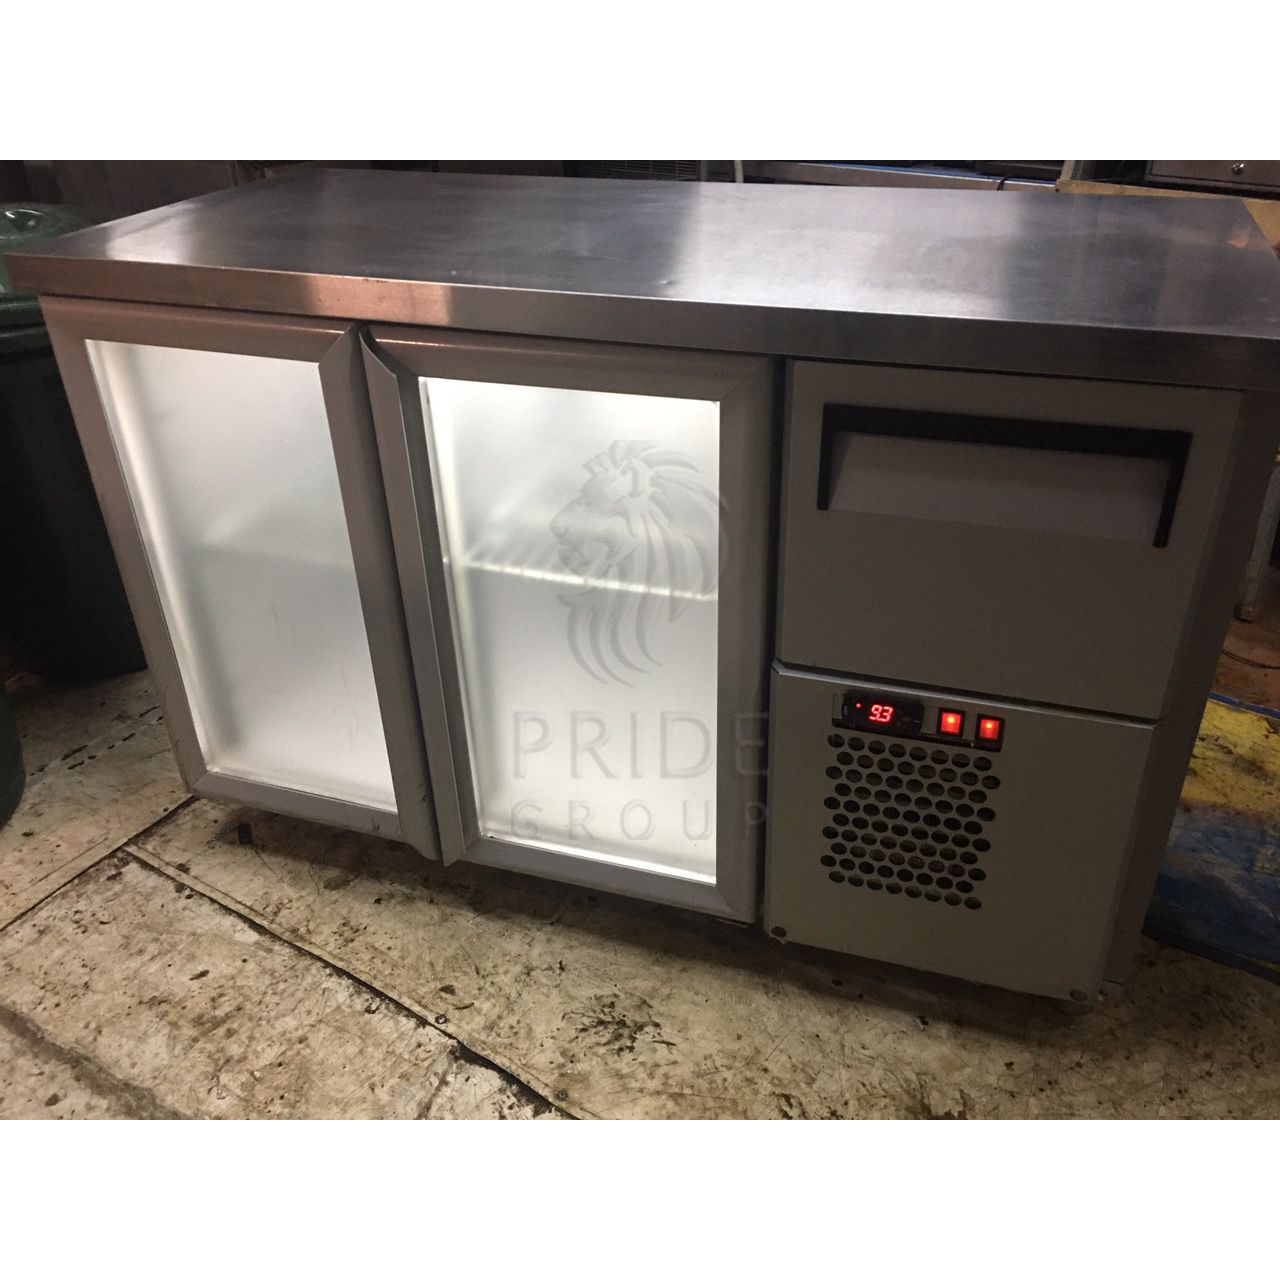 картинка Холодильный стол T70 M2-1-G X7 9006/9005 (2GNG/NT Carboma)